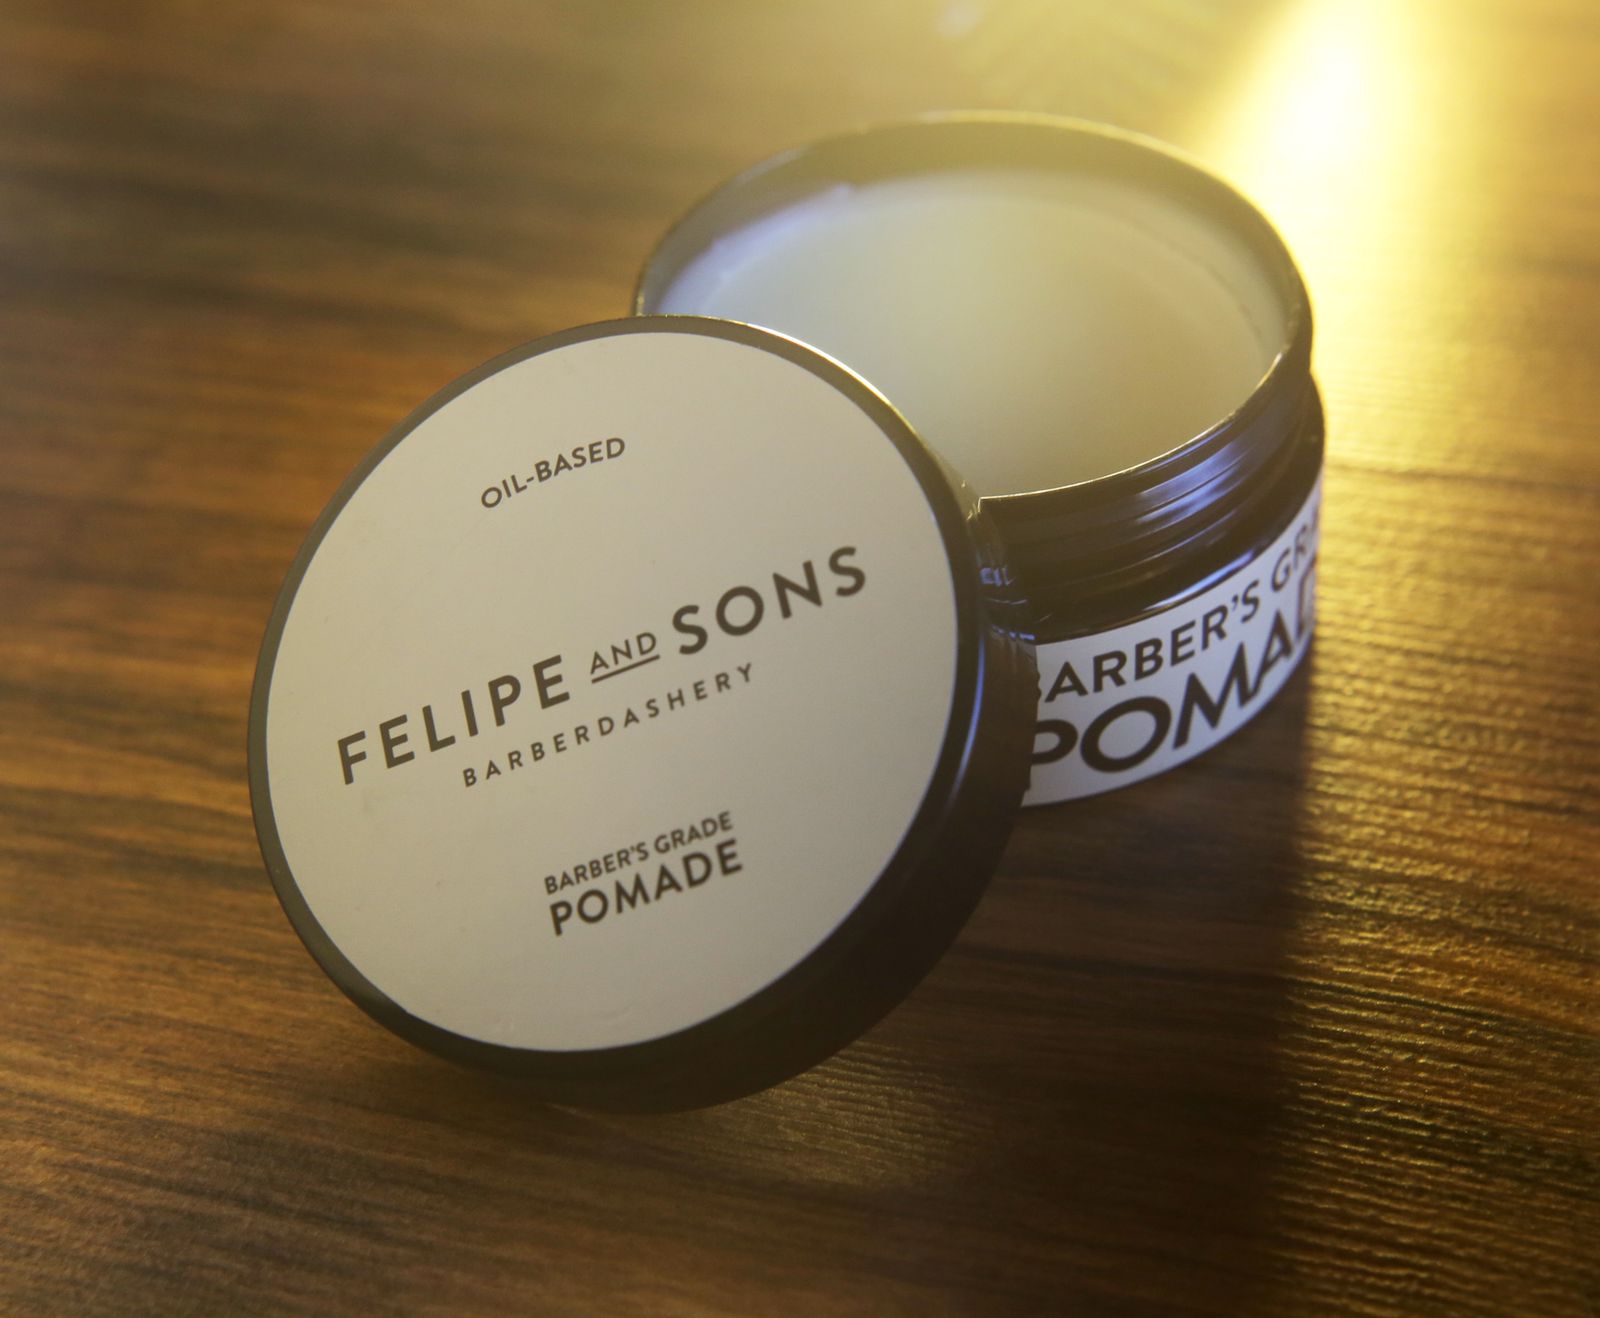 Felipe And Sons ₱350 PH Gift Card